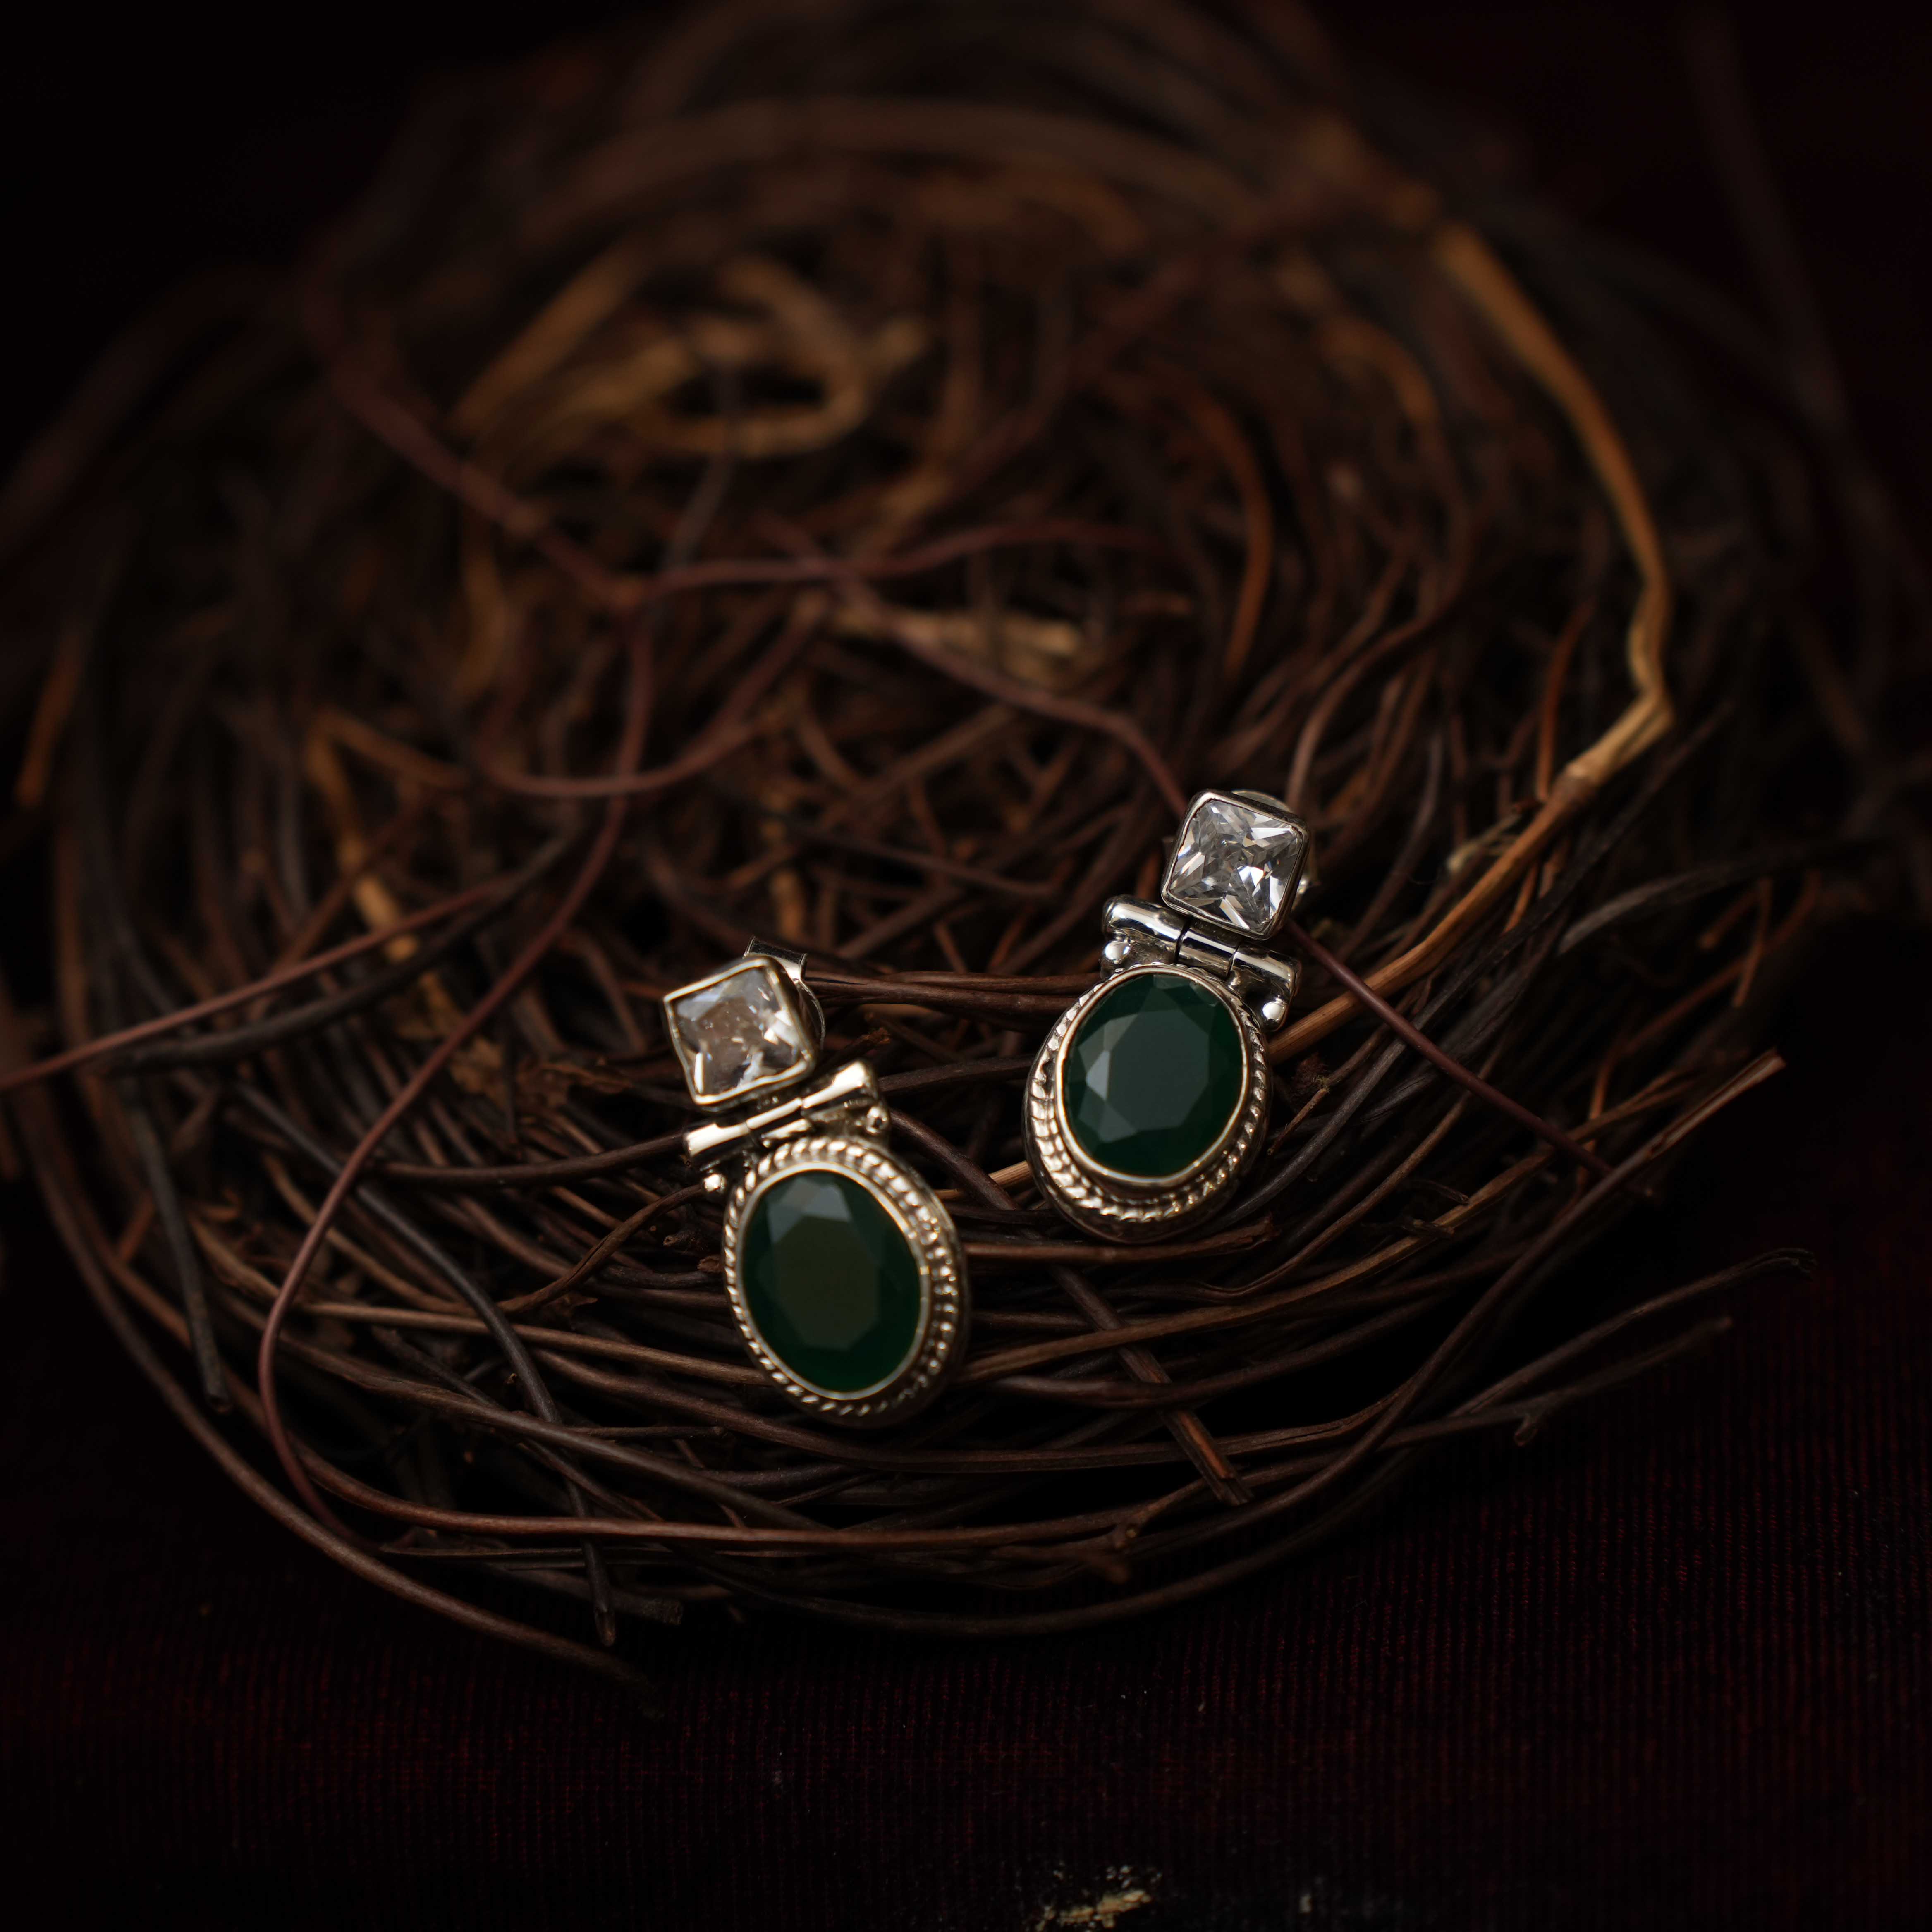 Radhi 925 Oxidized Silver Earrings - Green